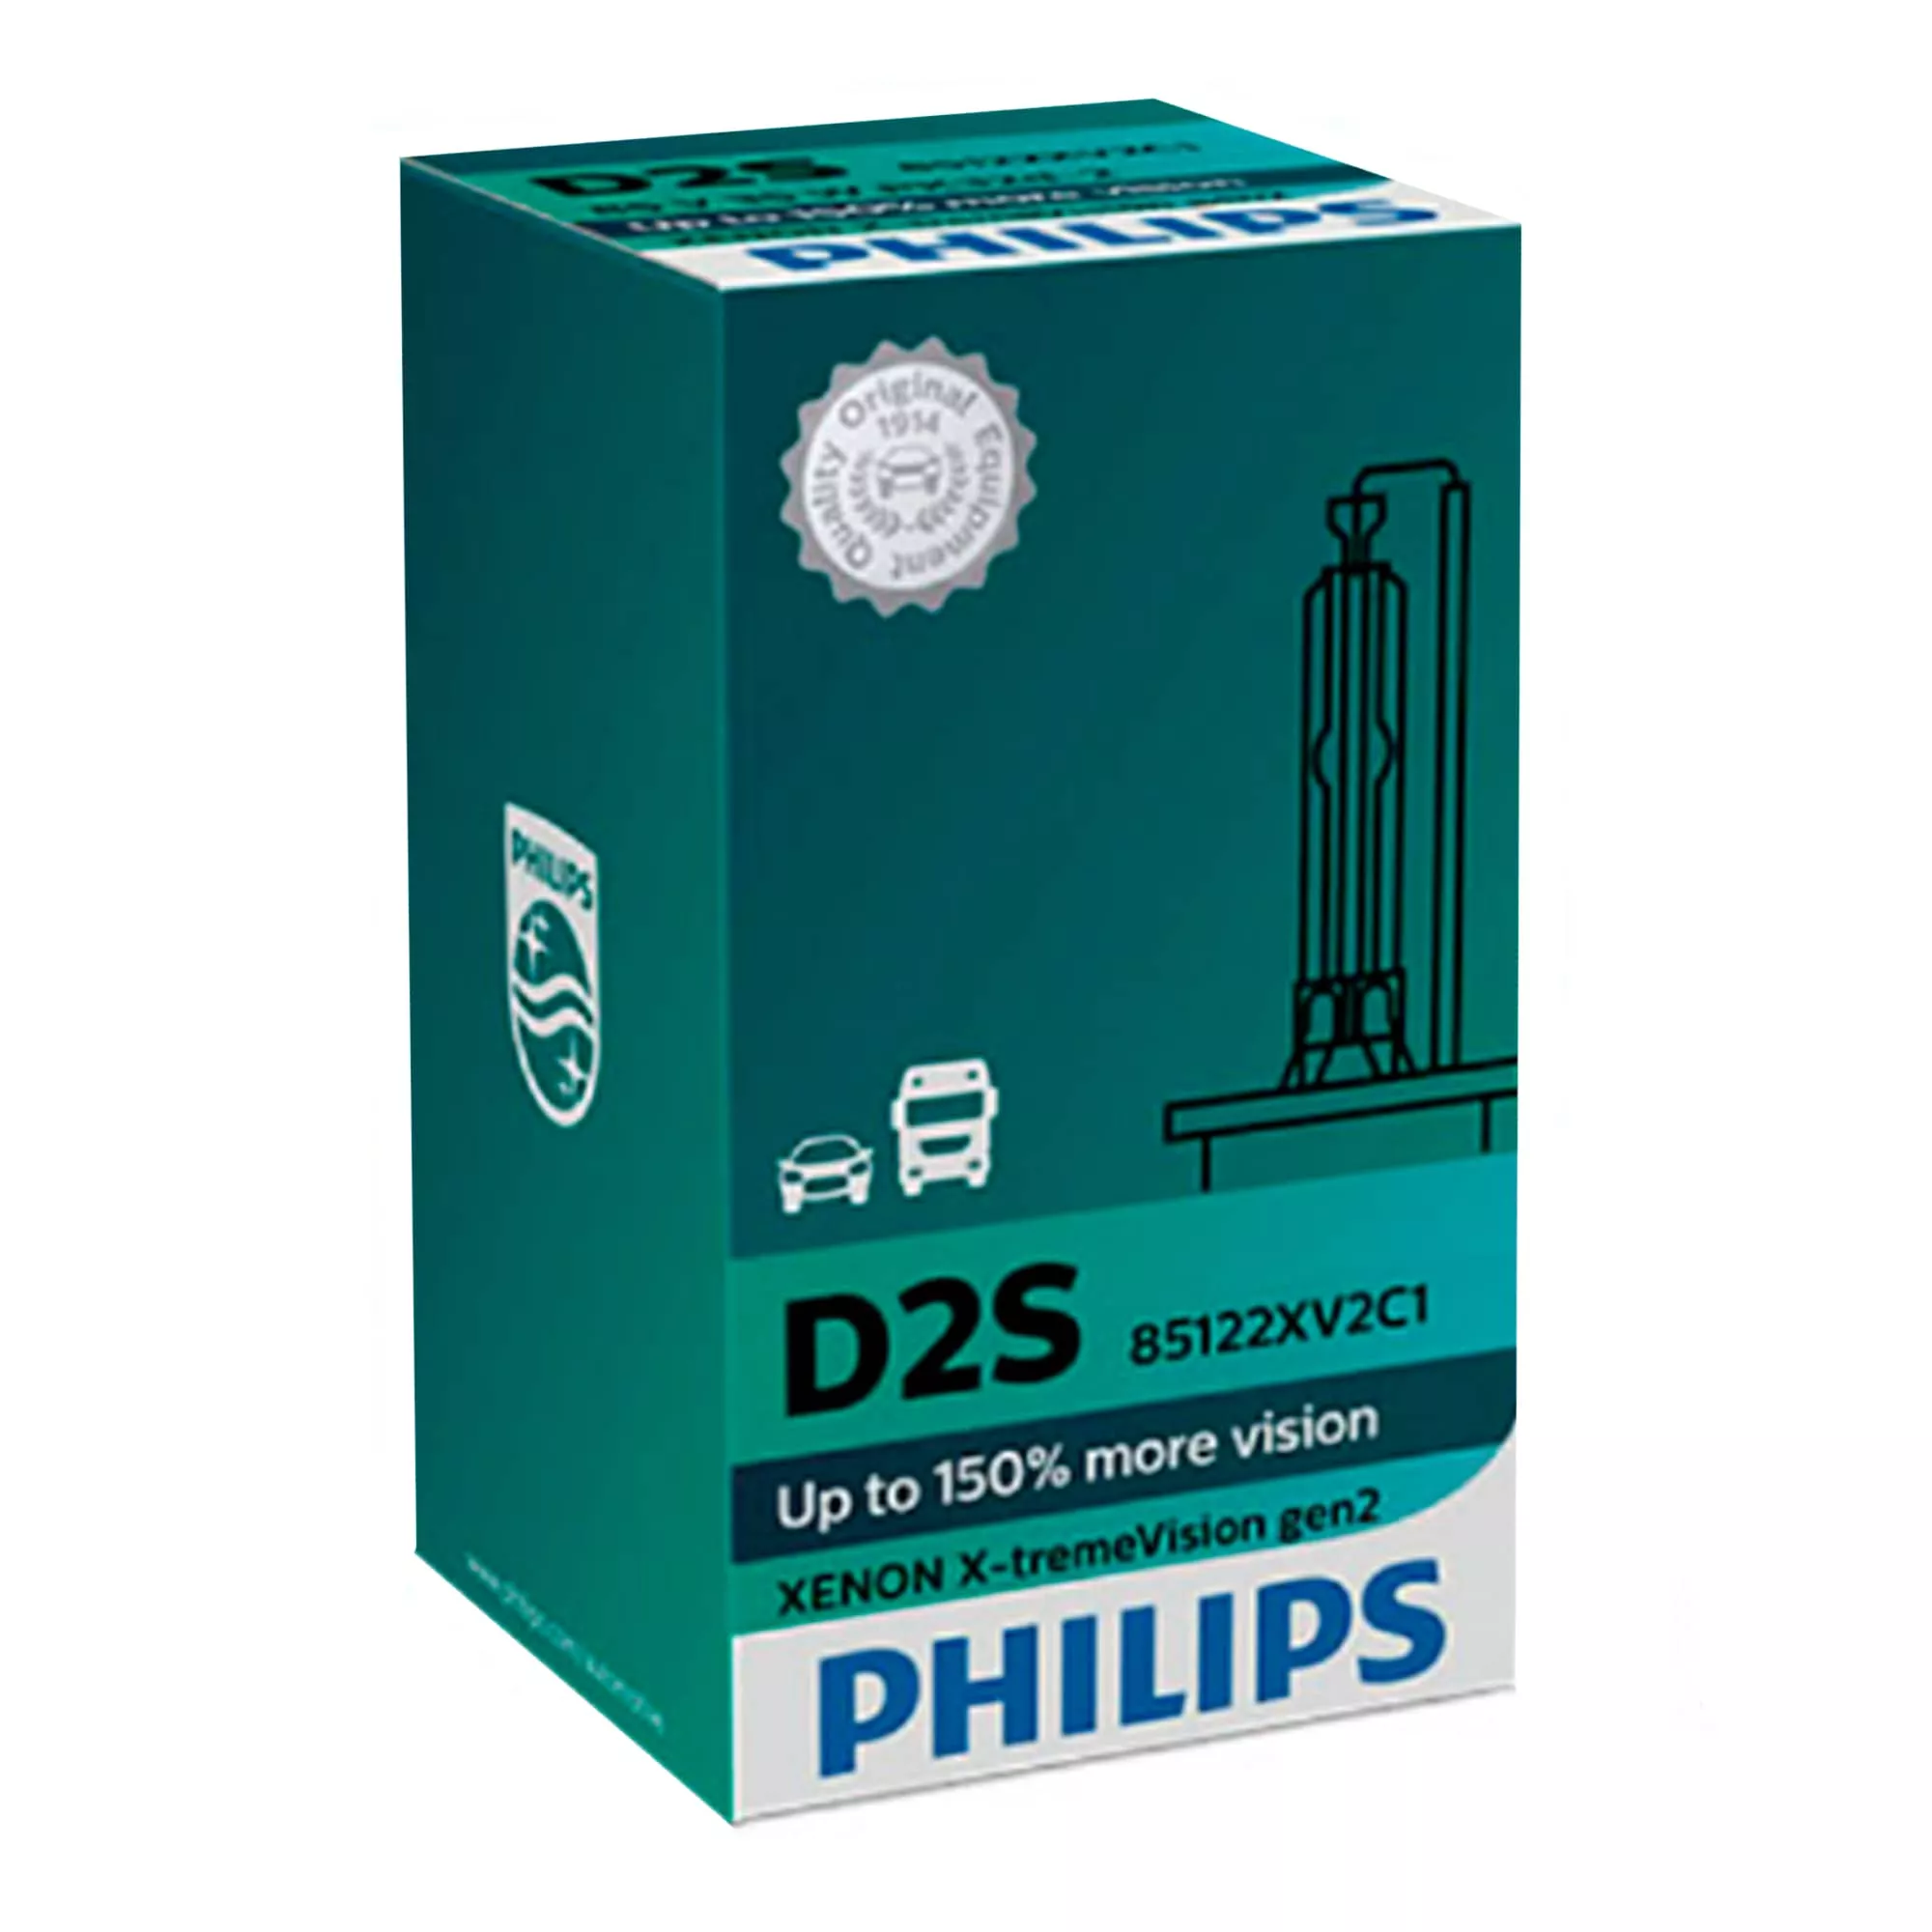 Лампа Philips X-treme Vision gen 2 D2S 85V 35W 85122 XV2 C1